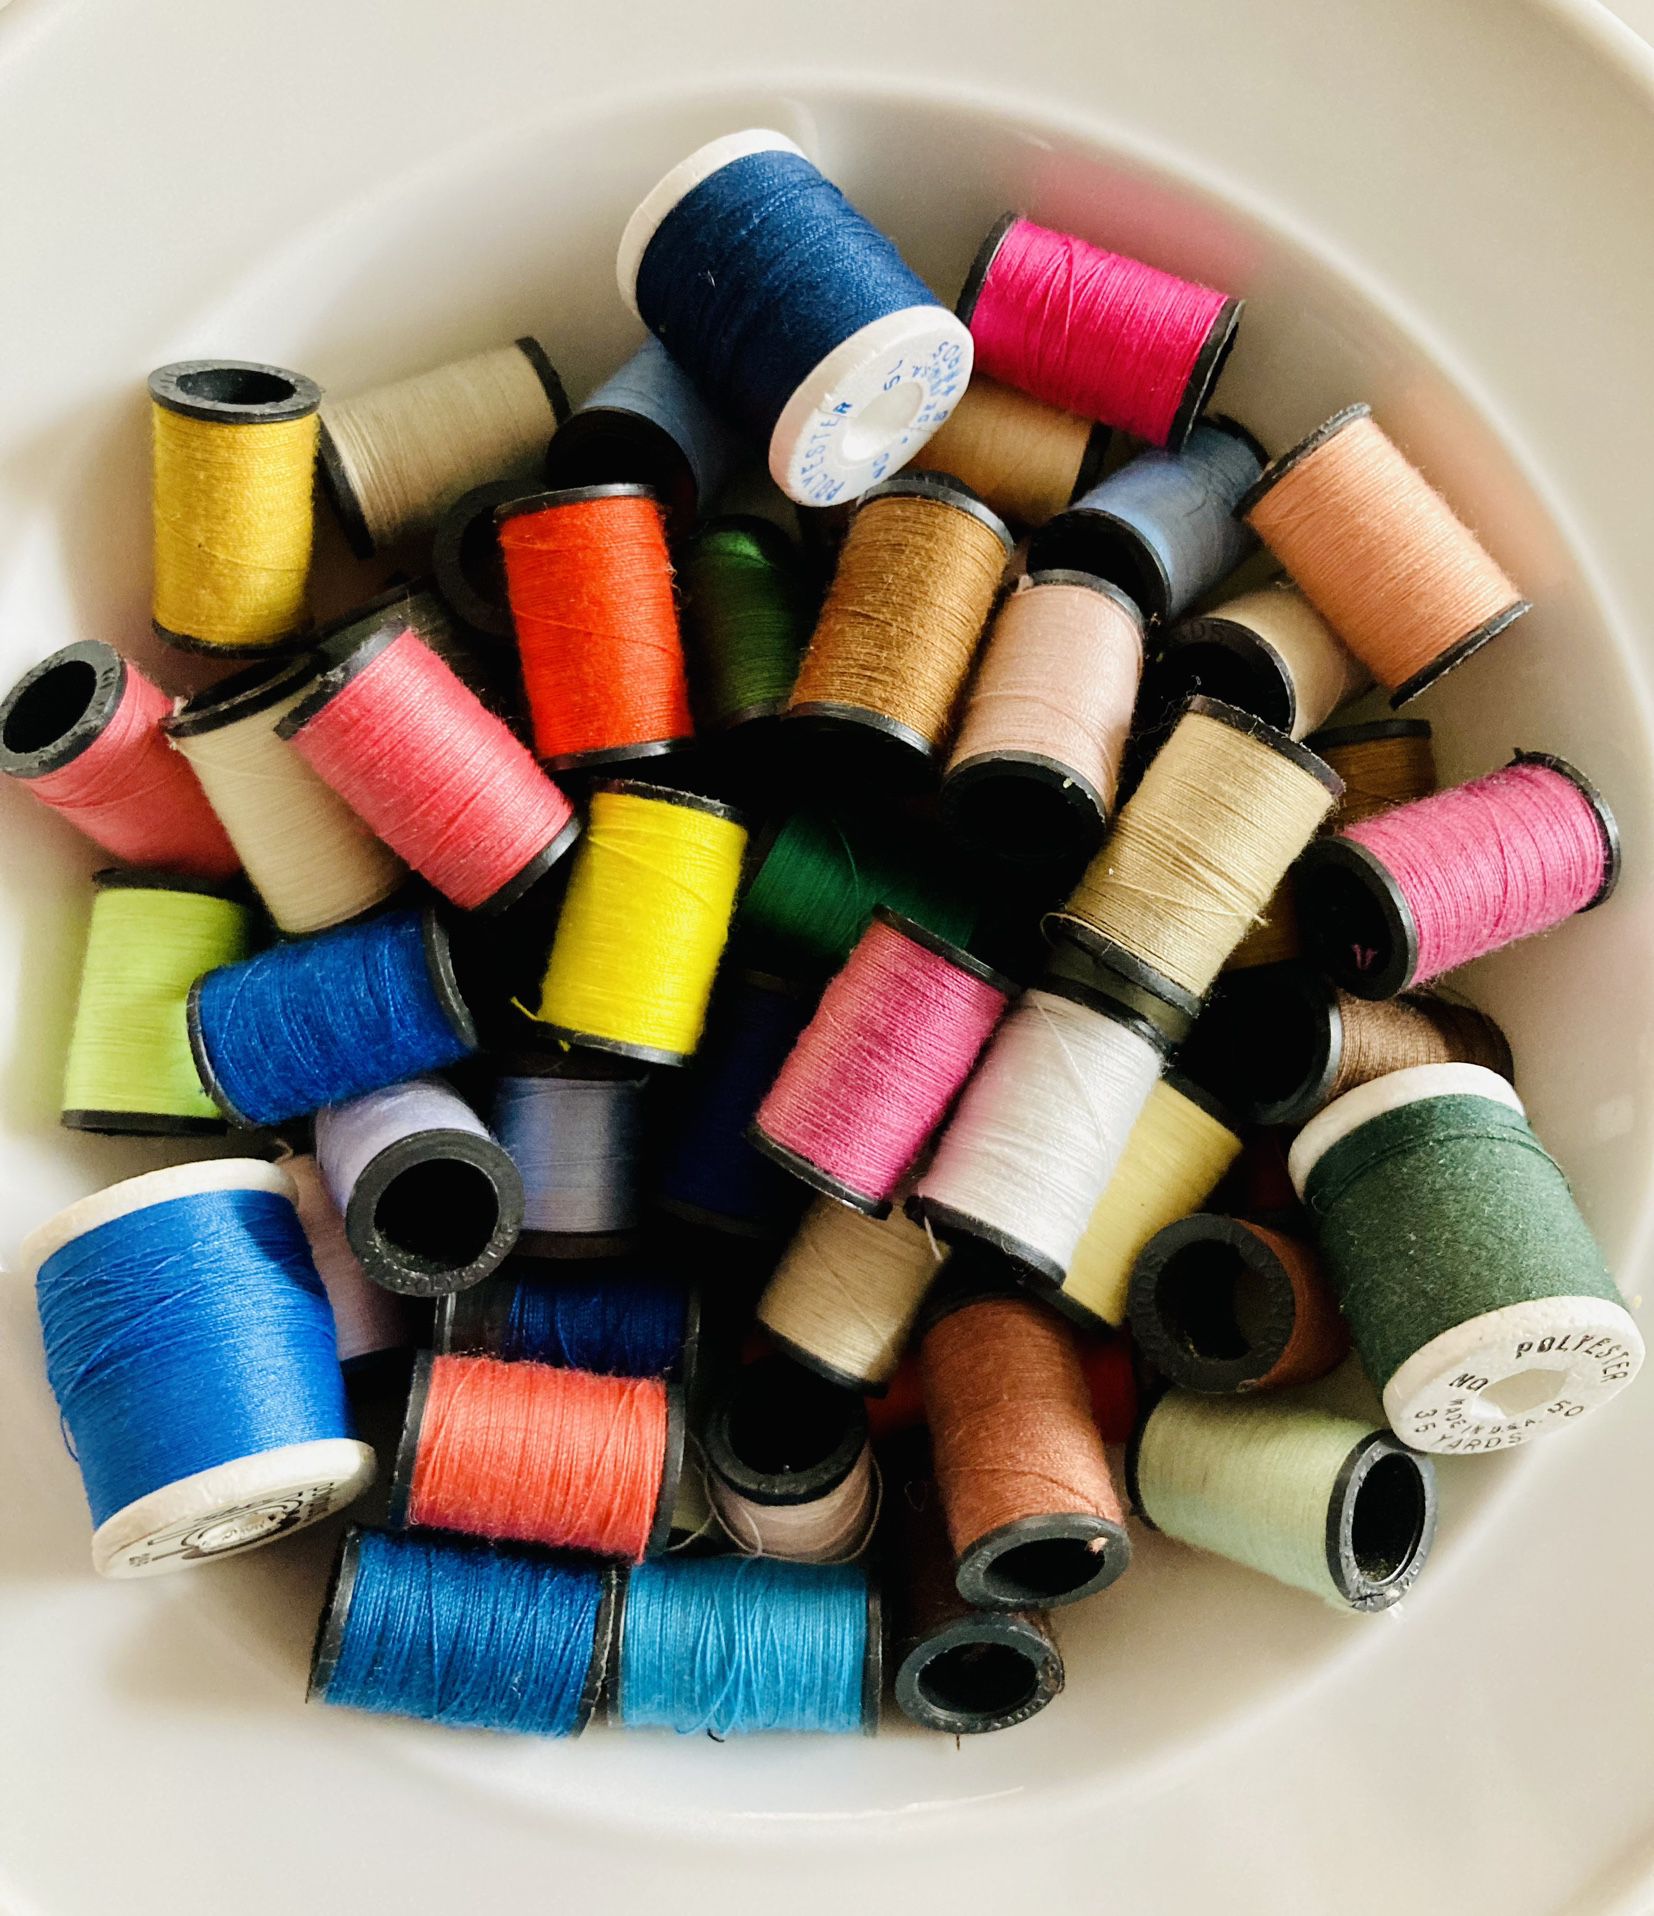 40+ spools 🧵 of thread, vibrant & traditional colors